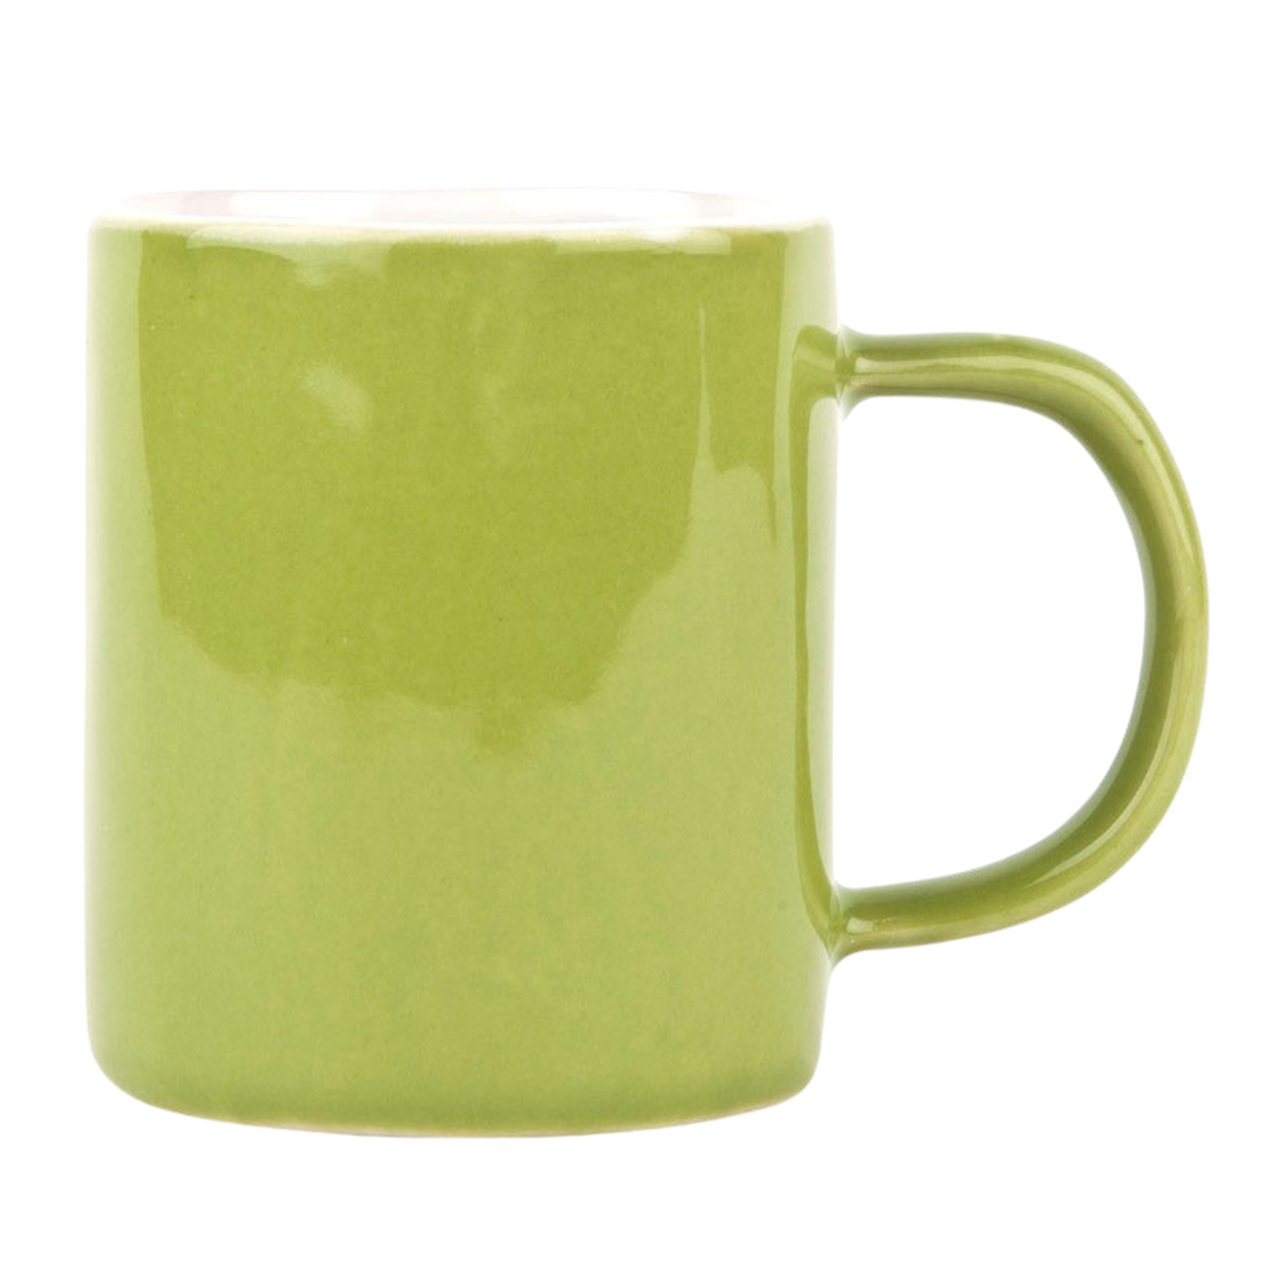 Quail’s Egg Ceramic Espresso Cup